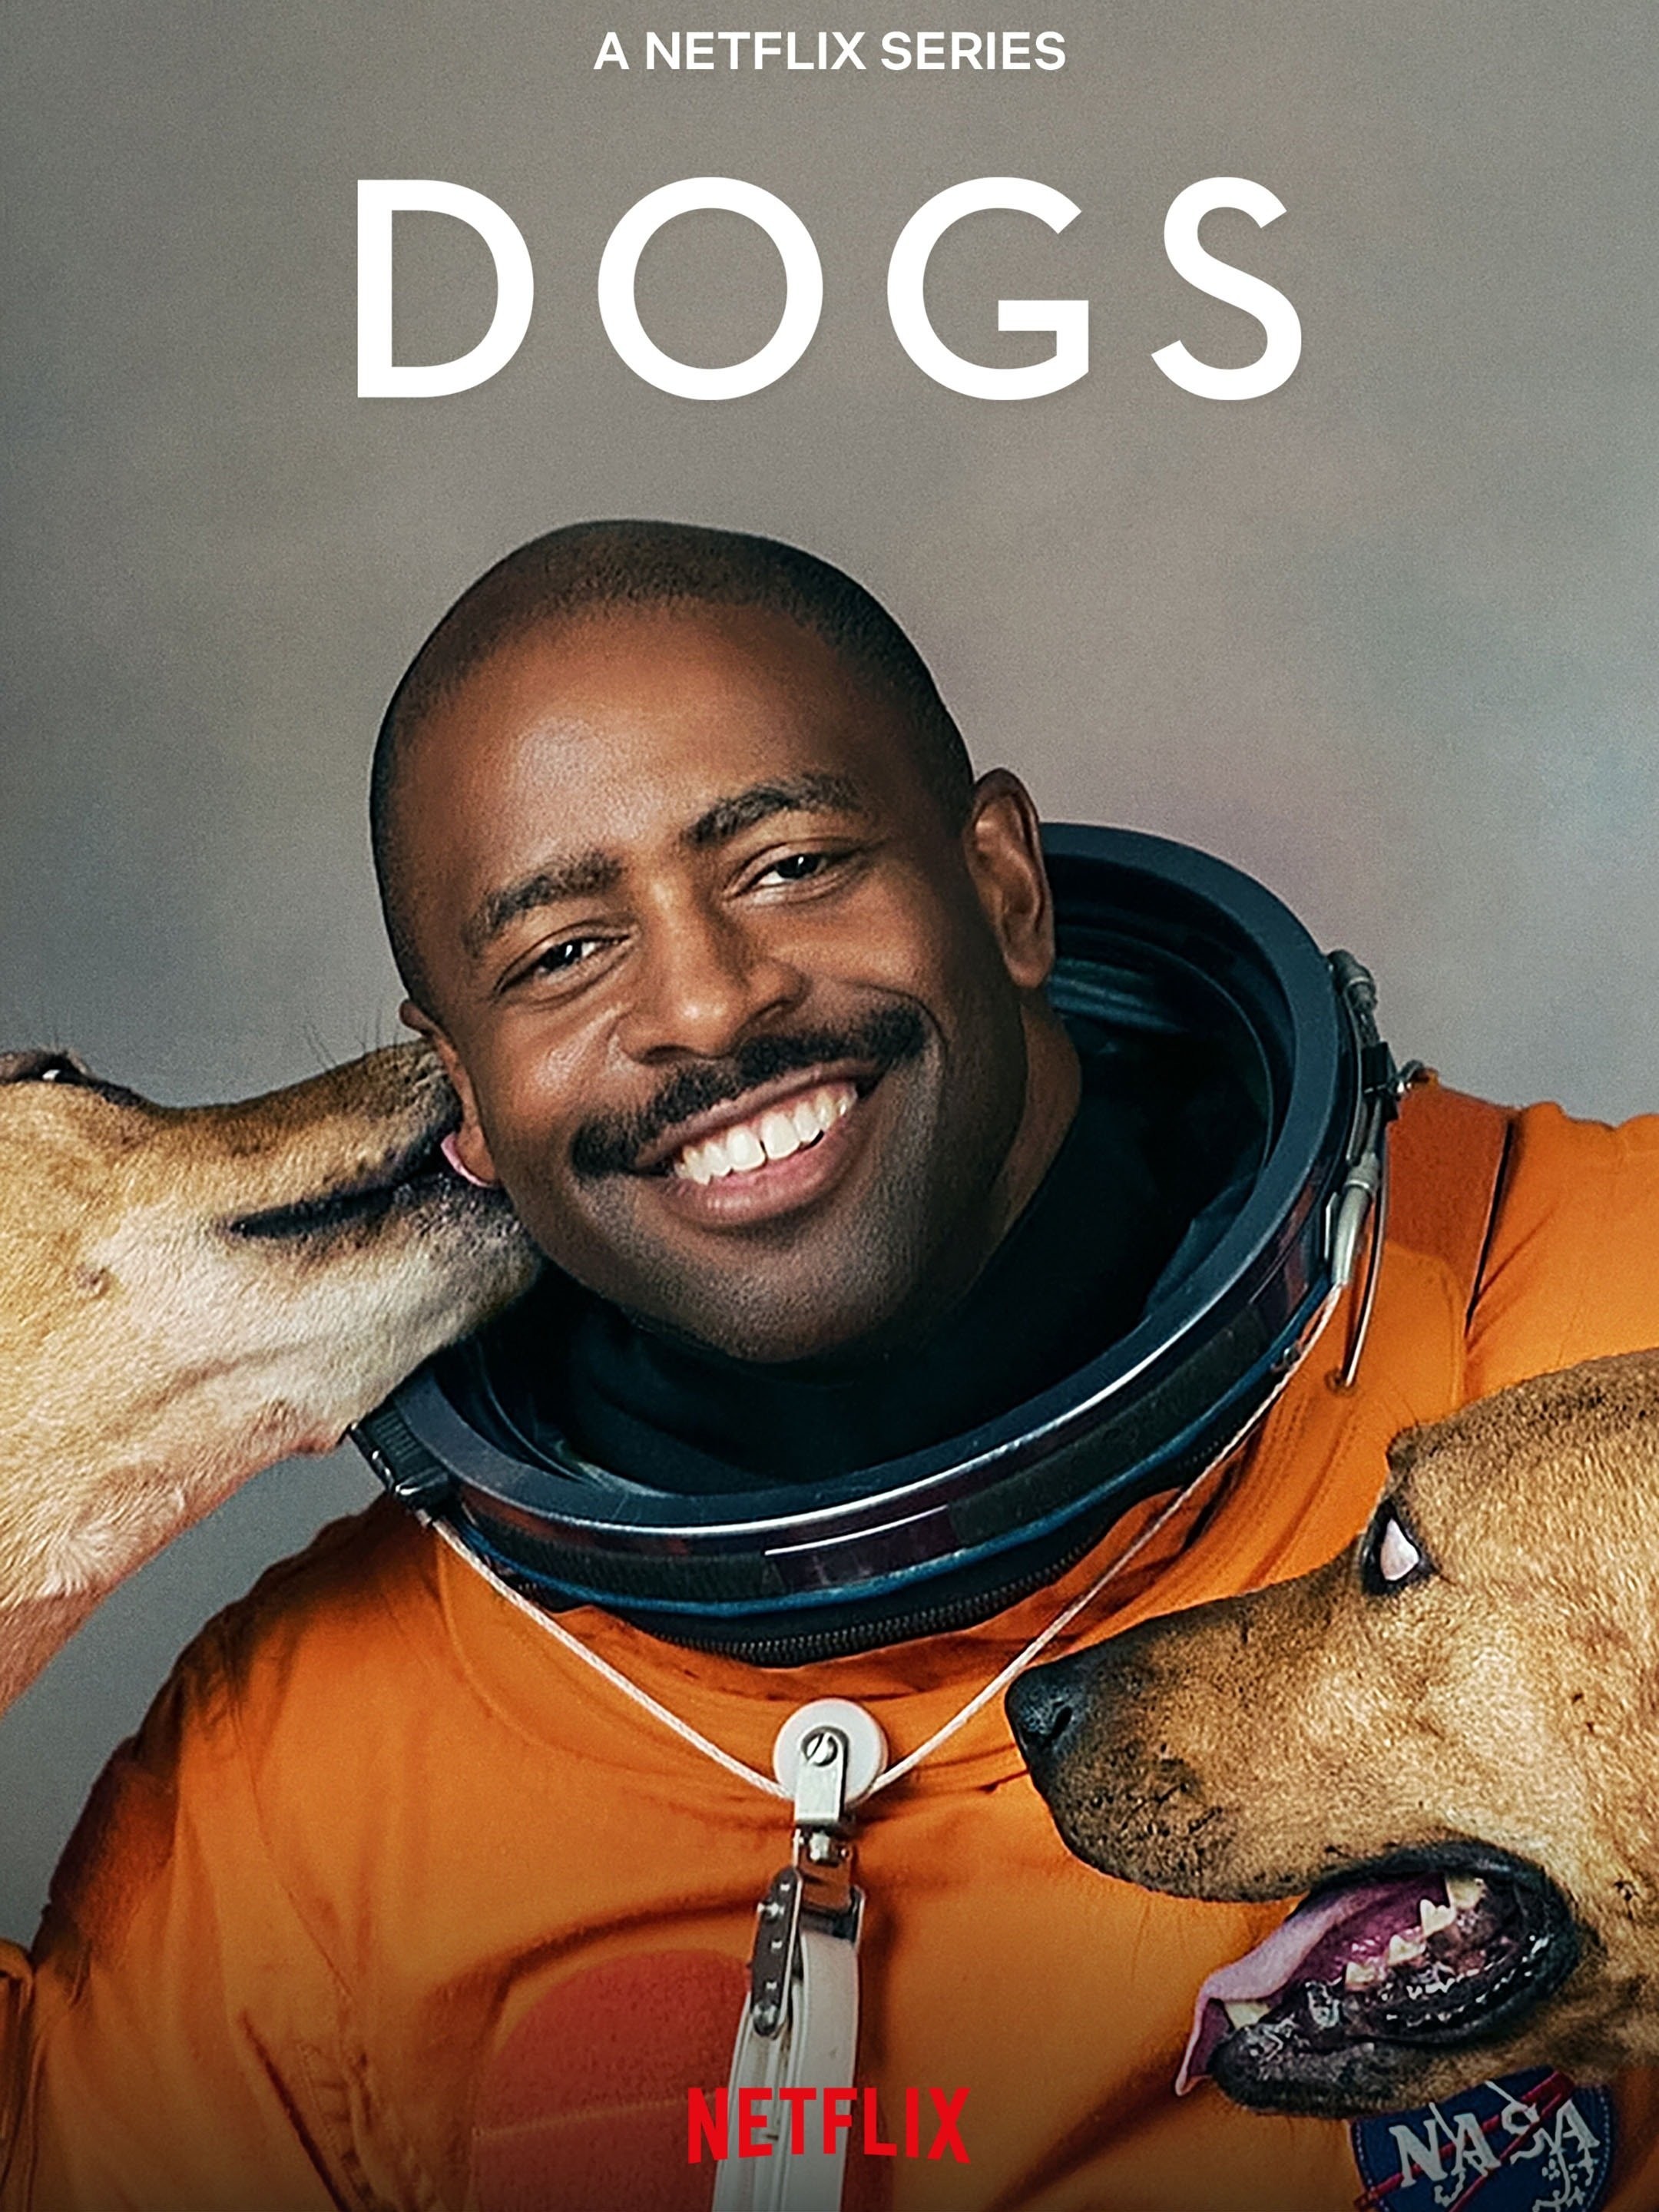 Dog Movies on Netflix  POPSUGAR Entertainment